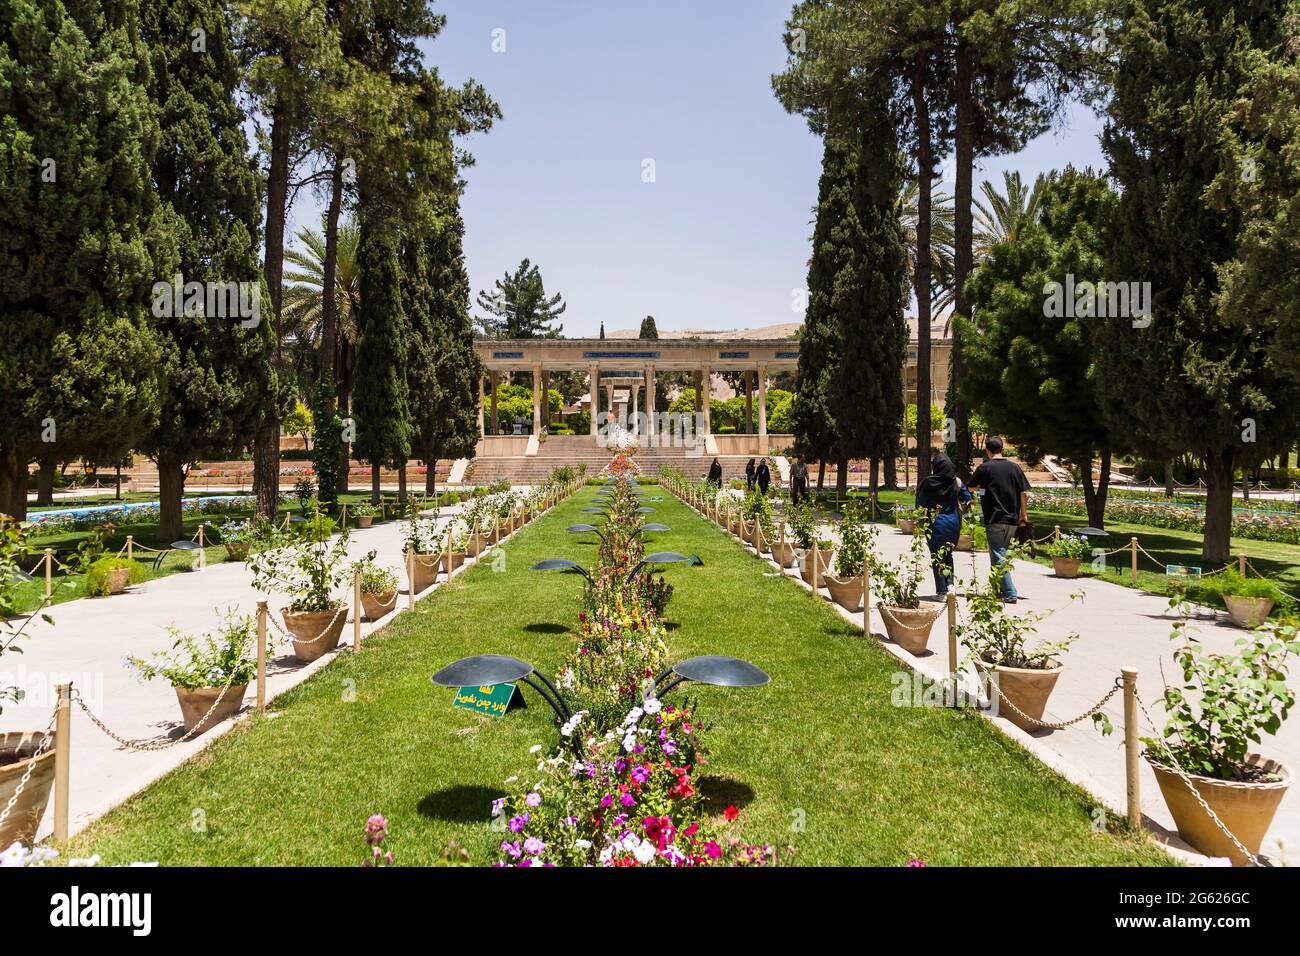 Tomb of Hafez, Hafez was a Persian poet, 14th century, Shiraz, Fars Province, Iran, Persia, Western Asia, Asia Stock Photo